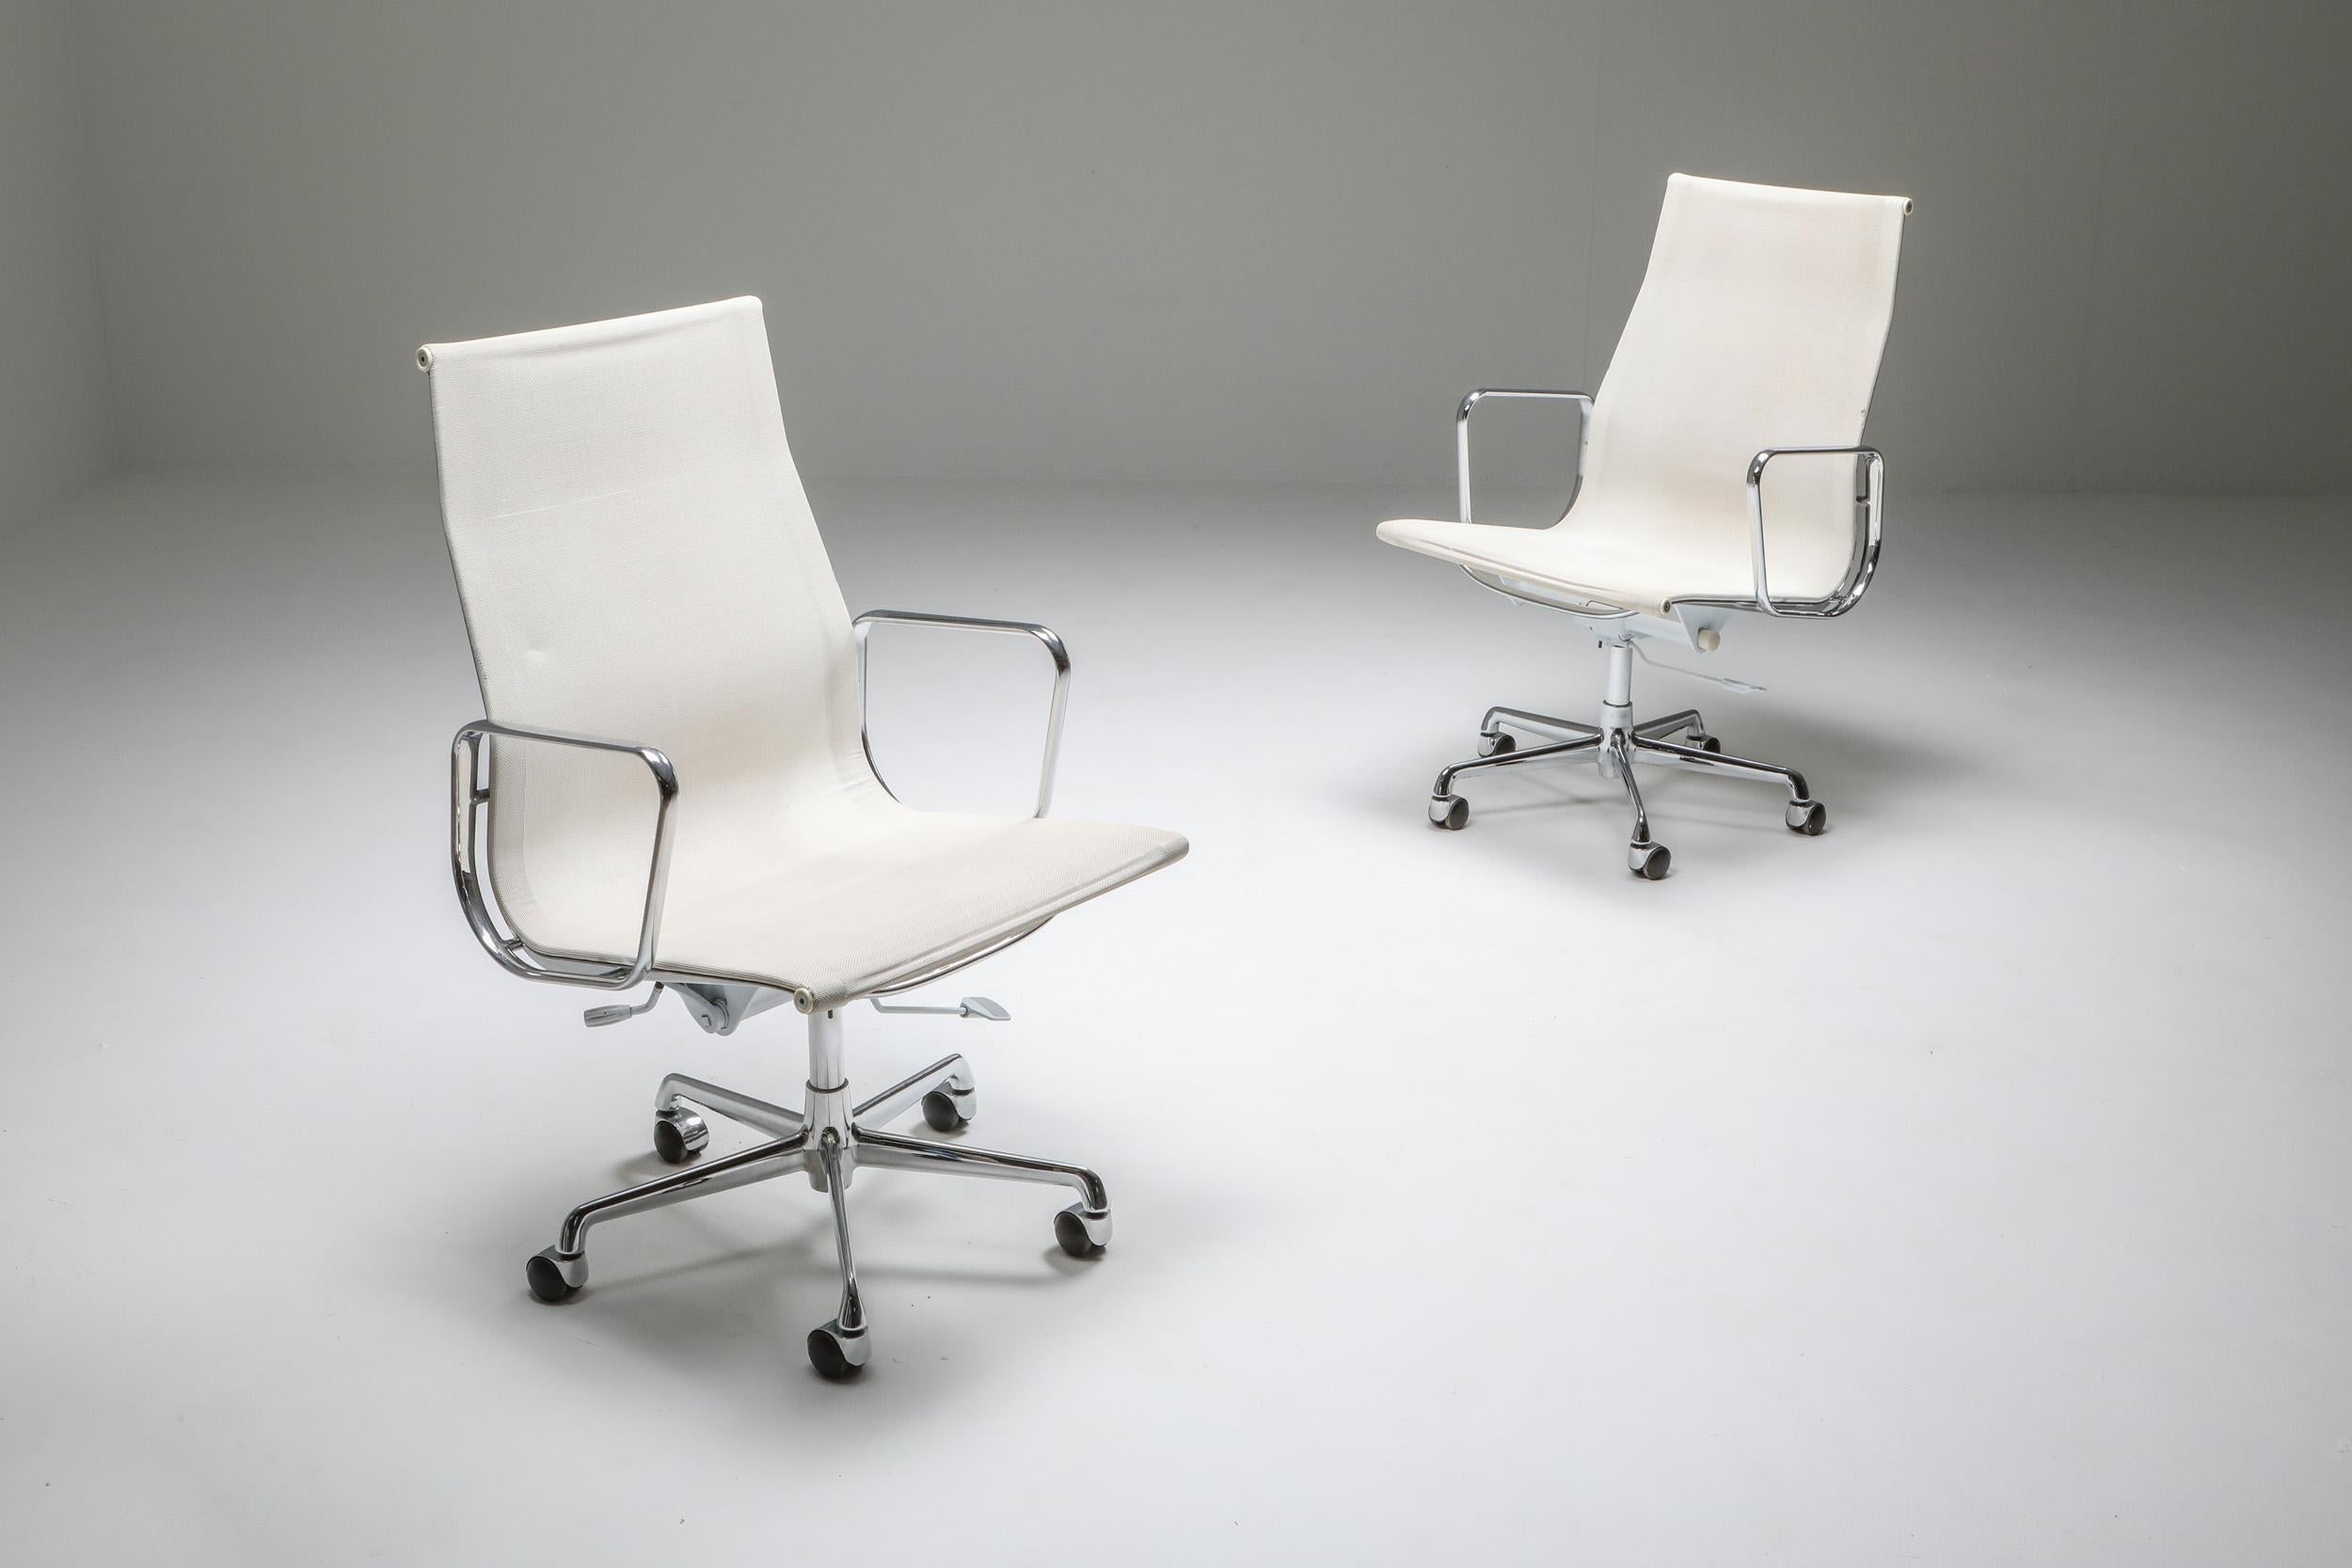 Charles Eames desk chair.